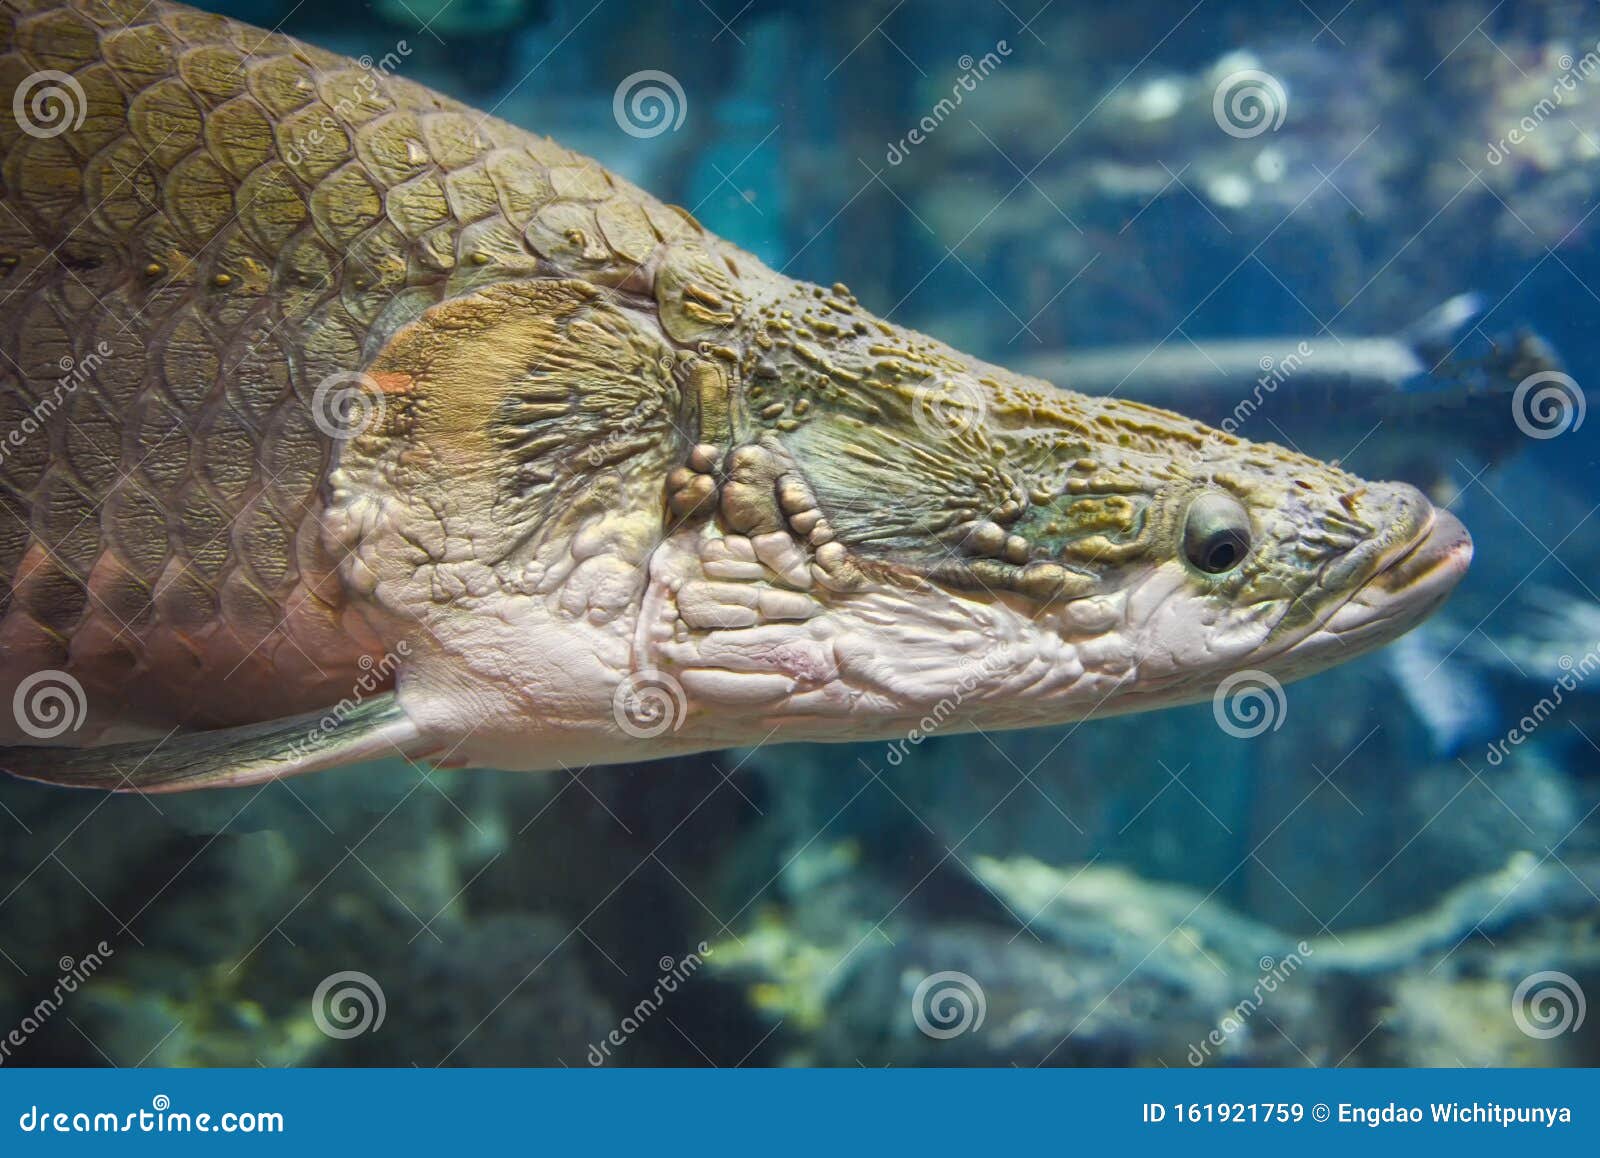 Arapaima Fish - Pirarucu Arapaima Gigas One Largest Freshwater Fish and  River Lakes in Brazil - Snake Head Fish Stock Image - Image of animal,  nature: 161921759